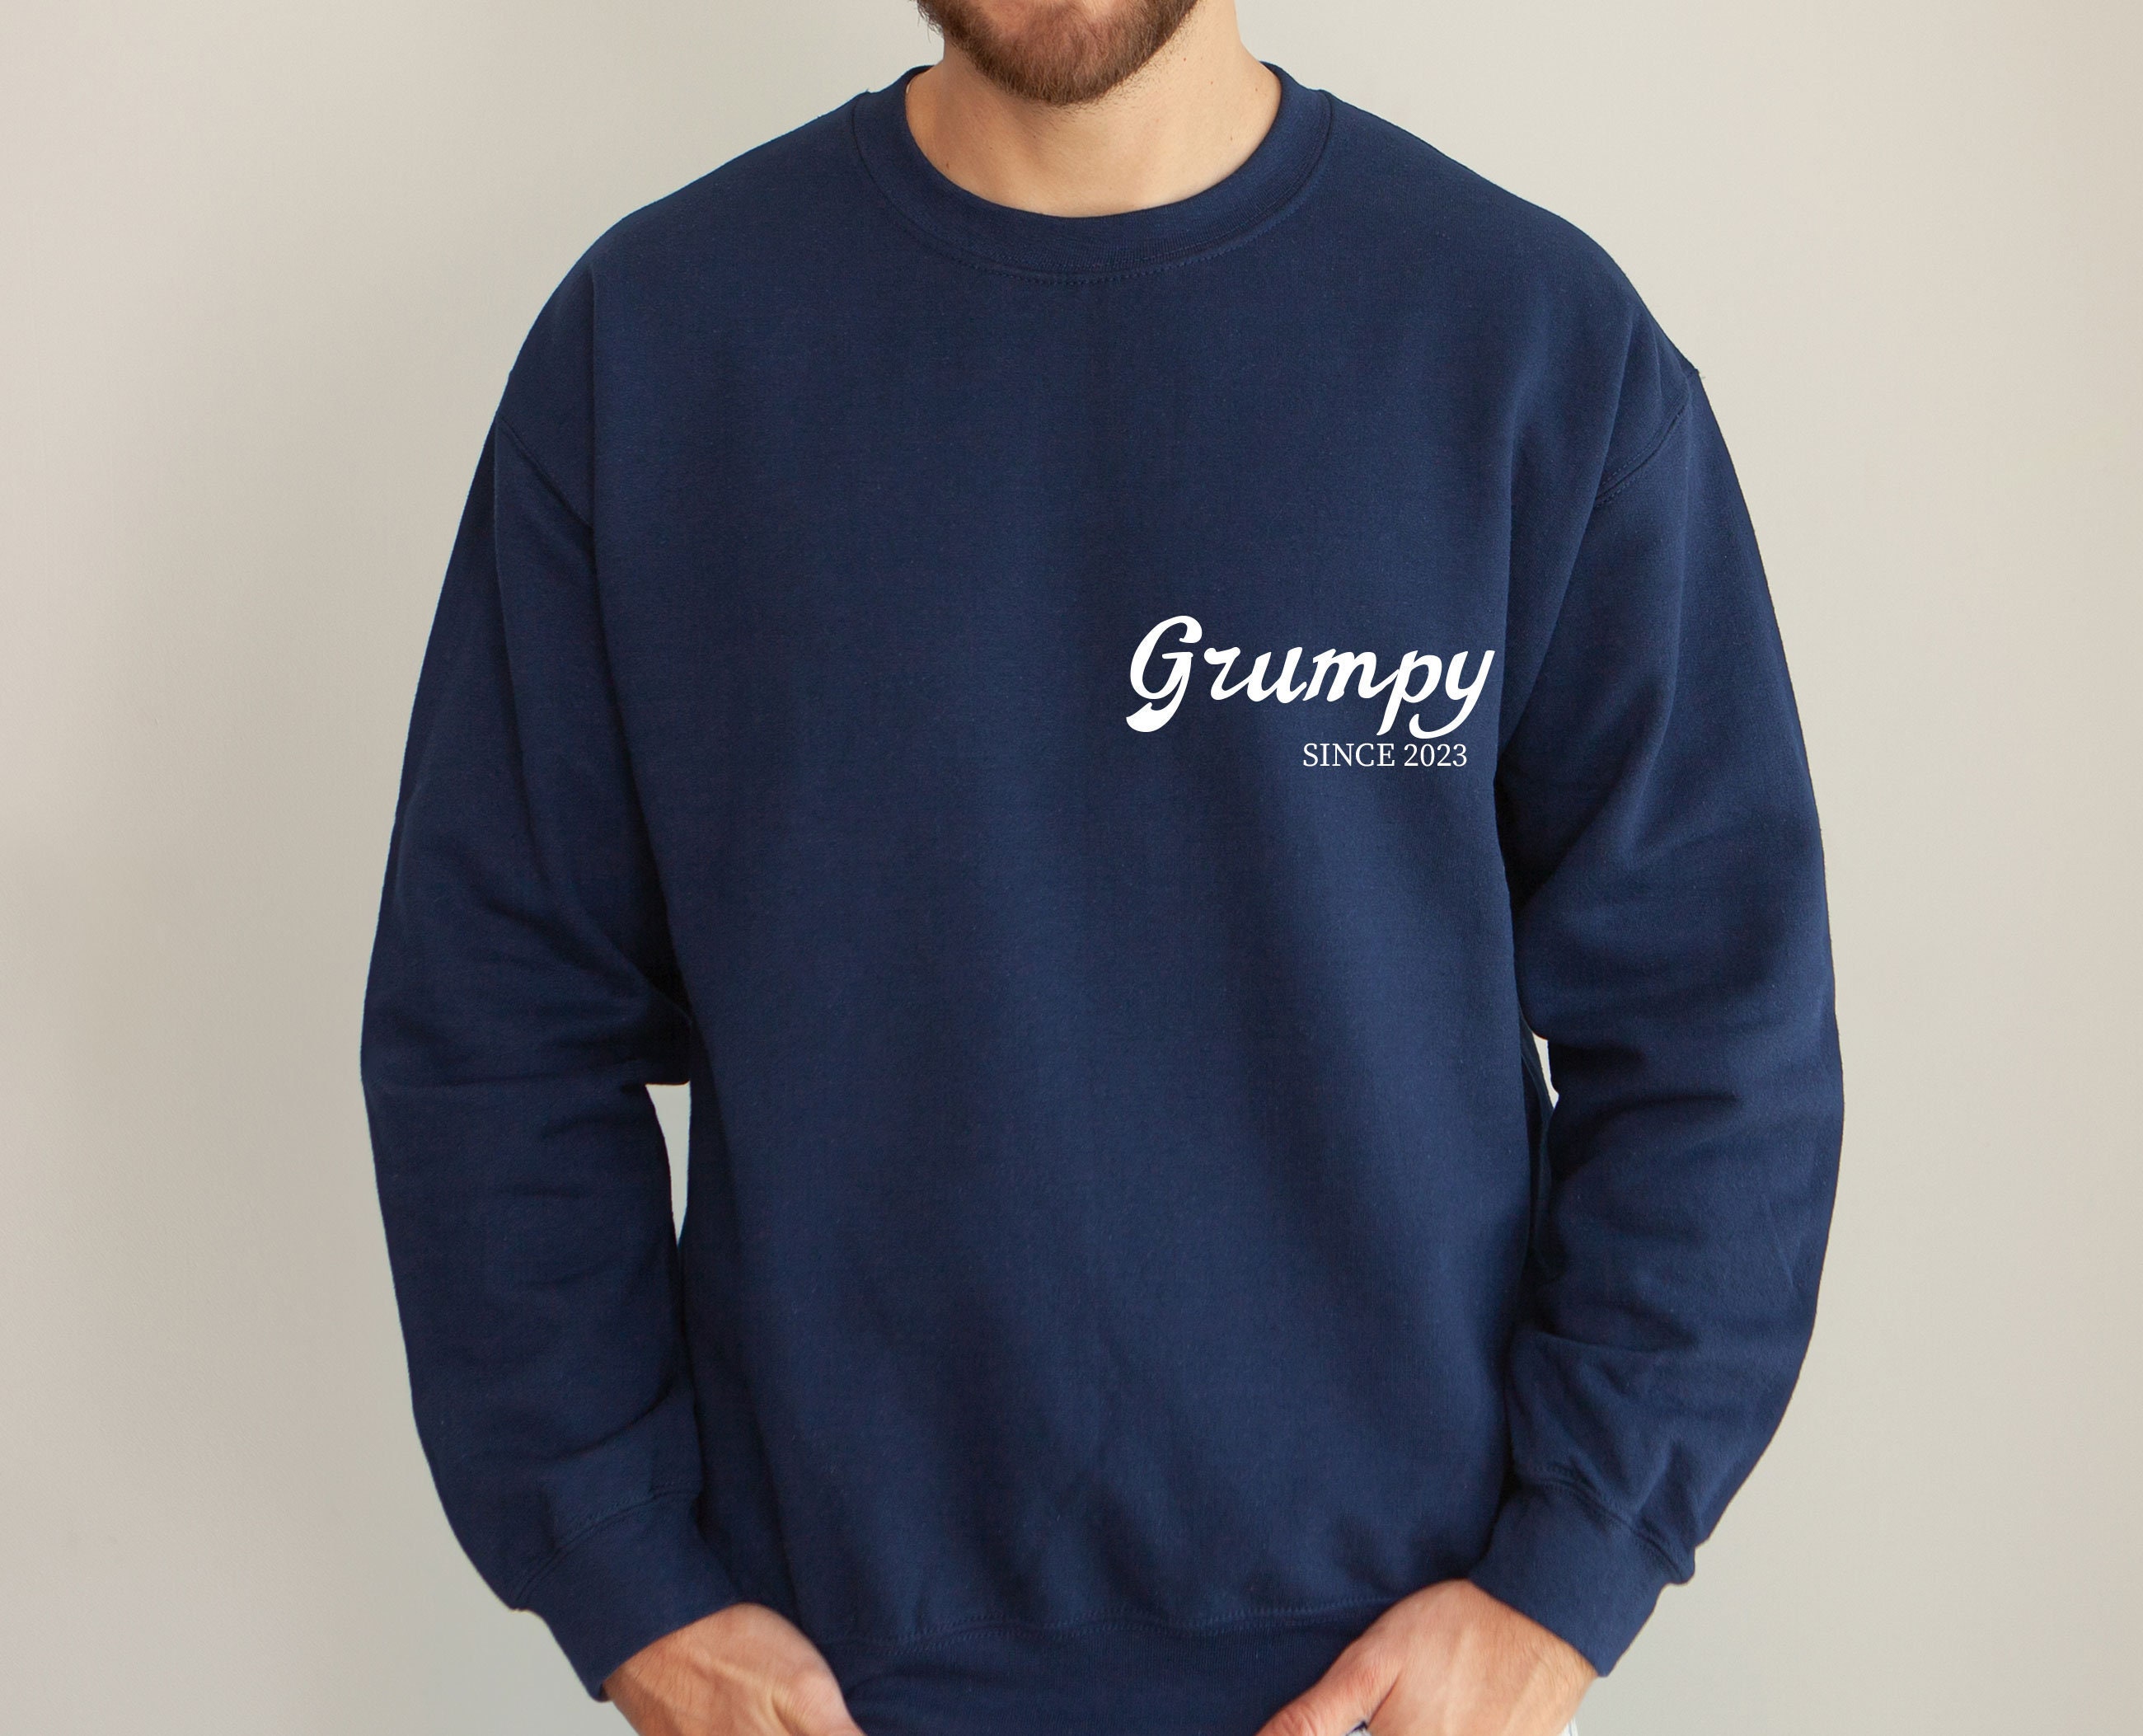 Grandpa Sweatshirt, Grandad Sweater, Grumpy Personalised Grandpa, Custom Grandad, New Jumper, Gift For